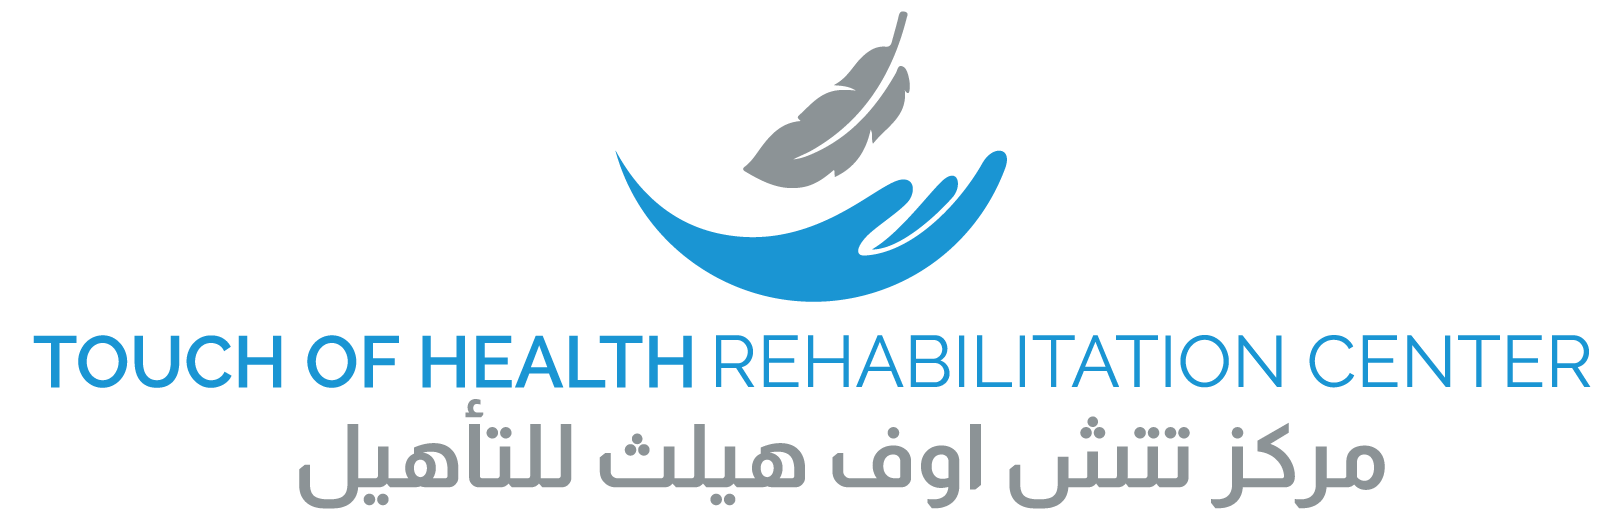 Touch of Health Rehabilitation Center